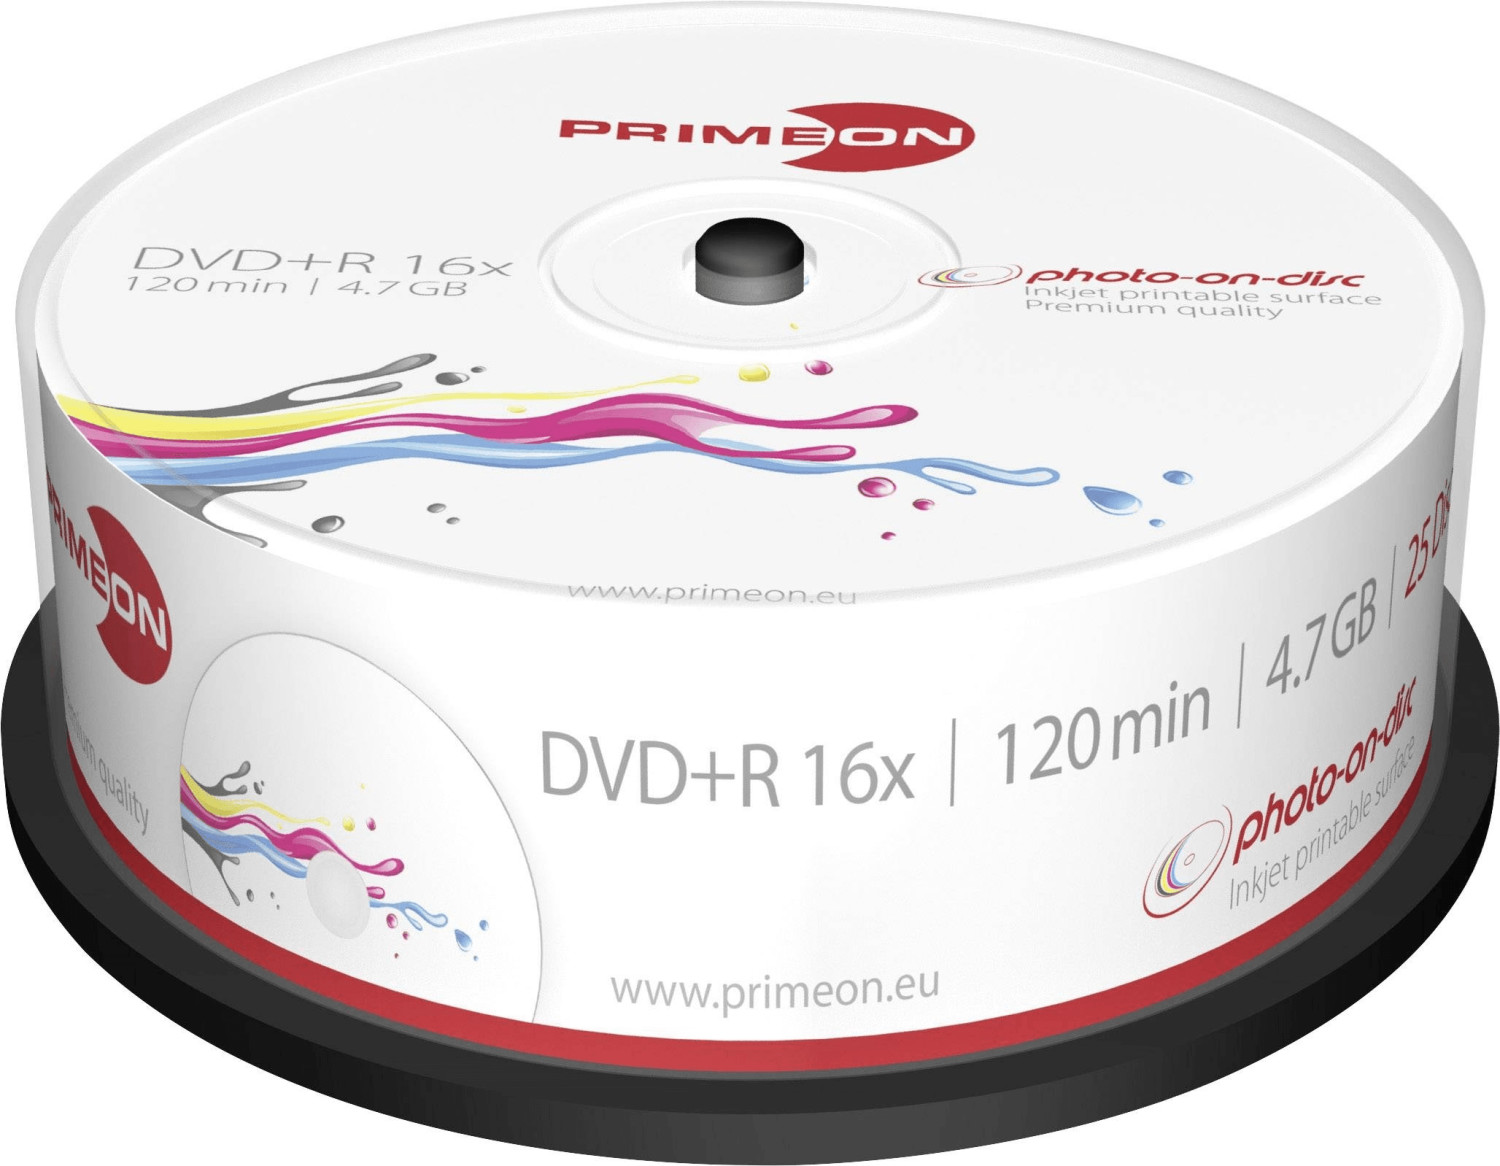 Primeon DVD+R 4,7 GB Photo-On-Disc Ultragloss printable 25pk Spindle